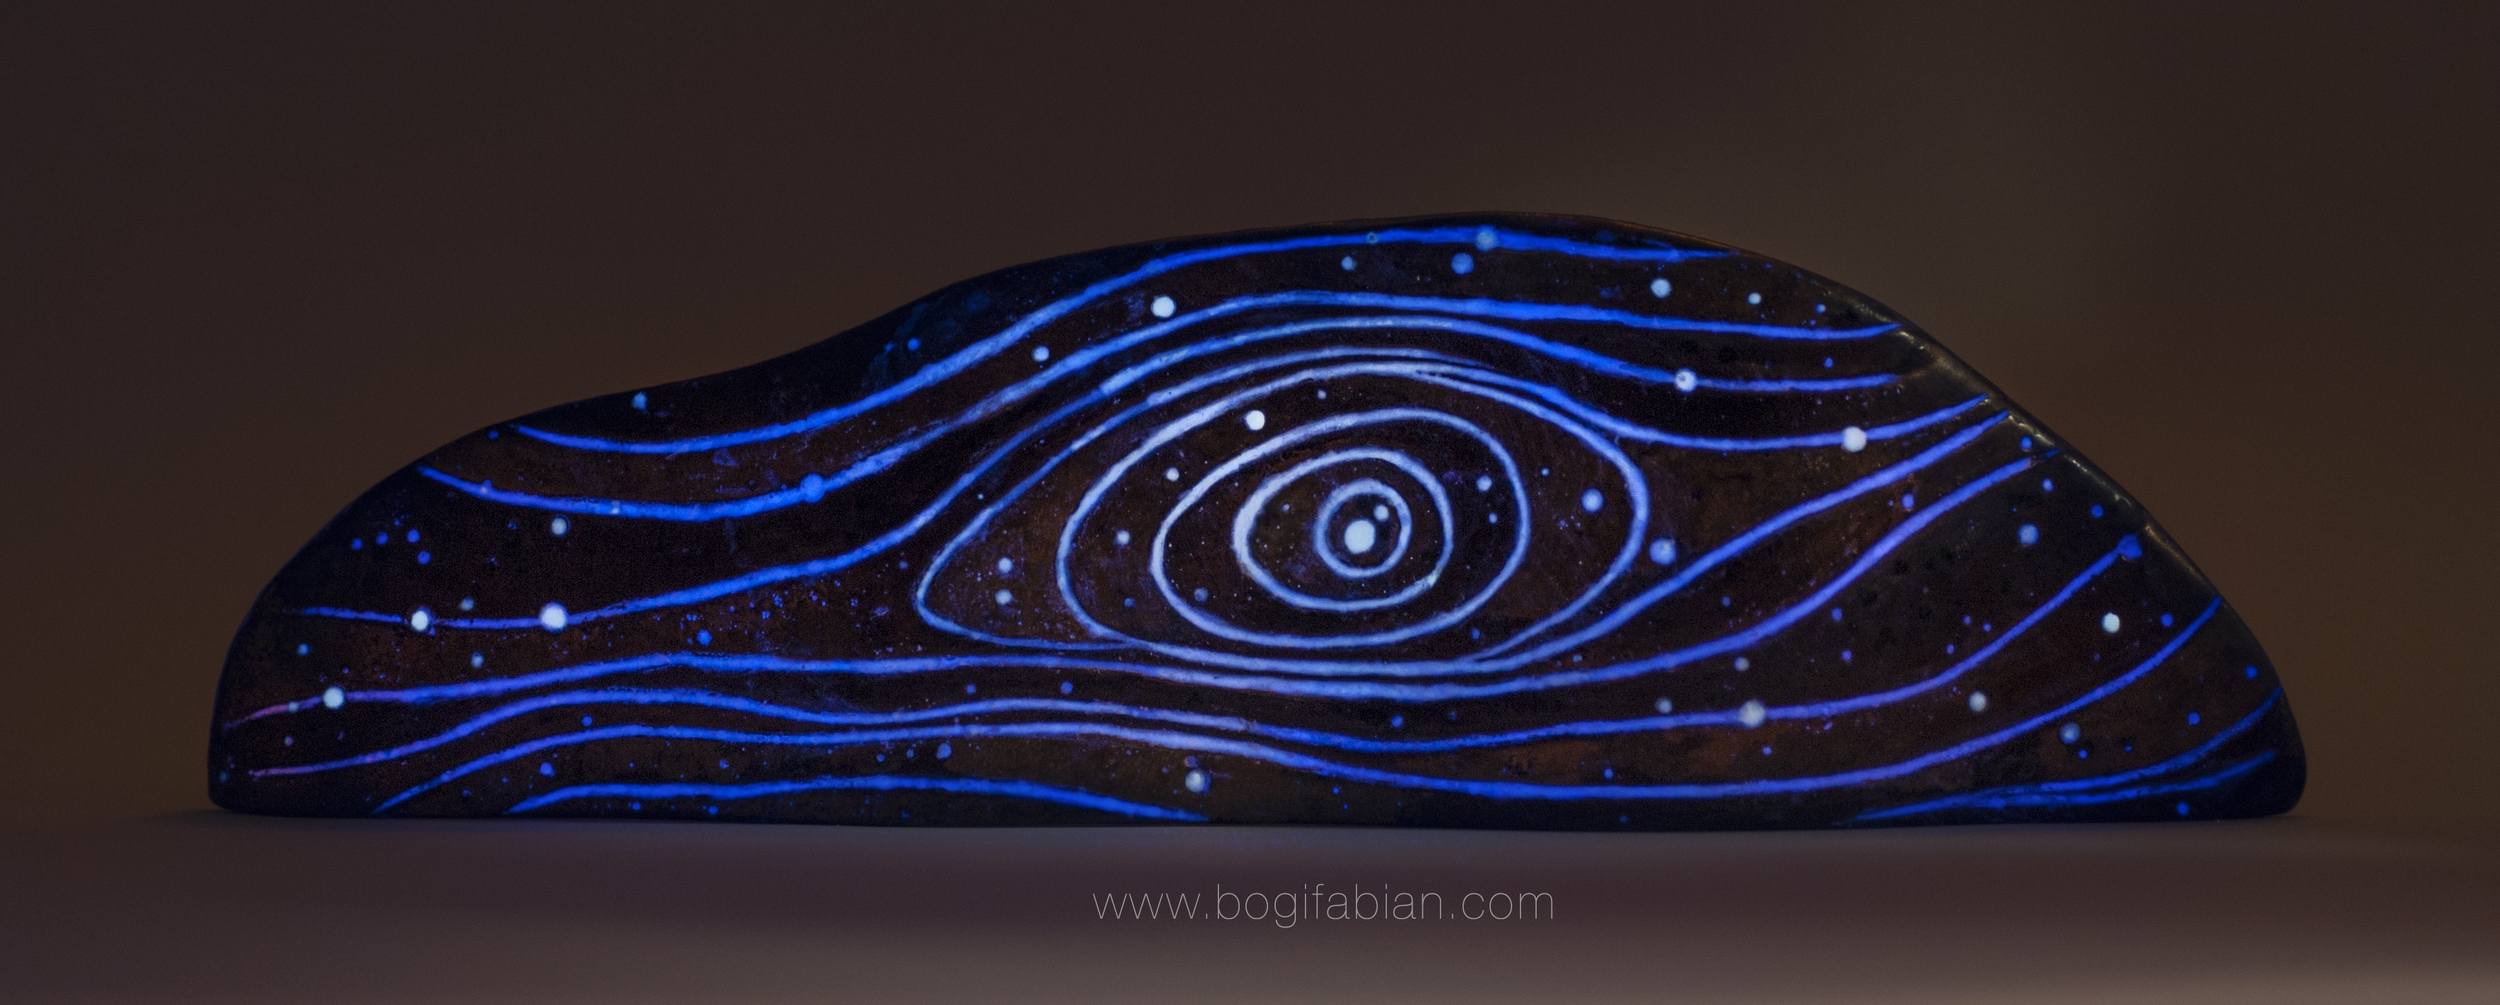 Bogi Fabian Glowing Ceramic sculpture Galaxy .jpg